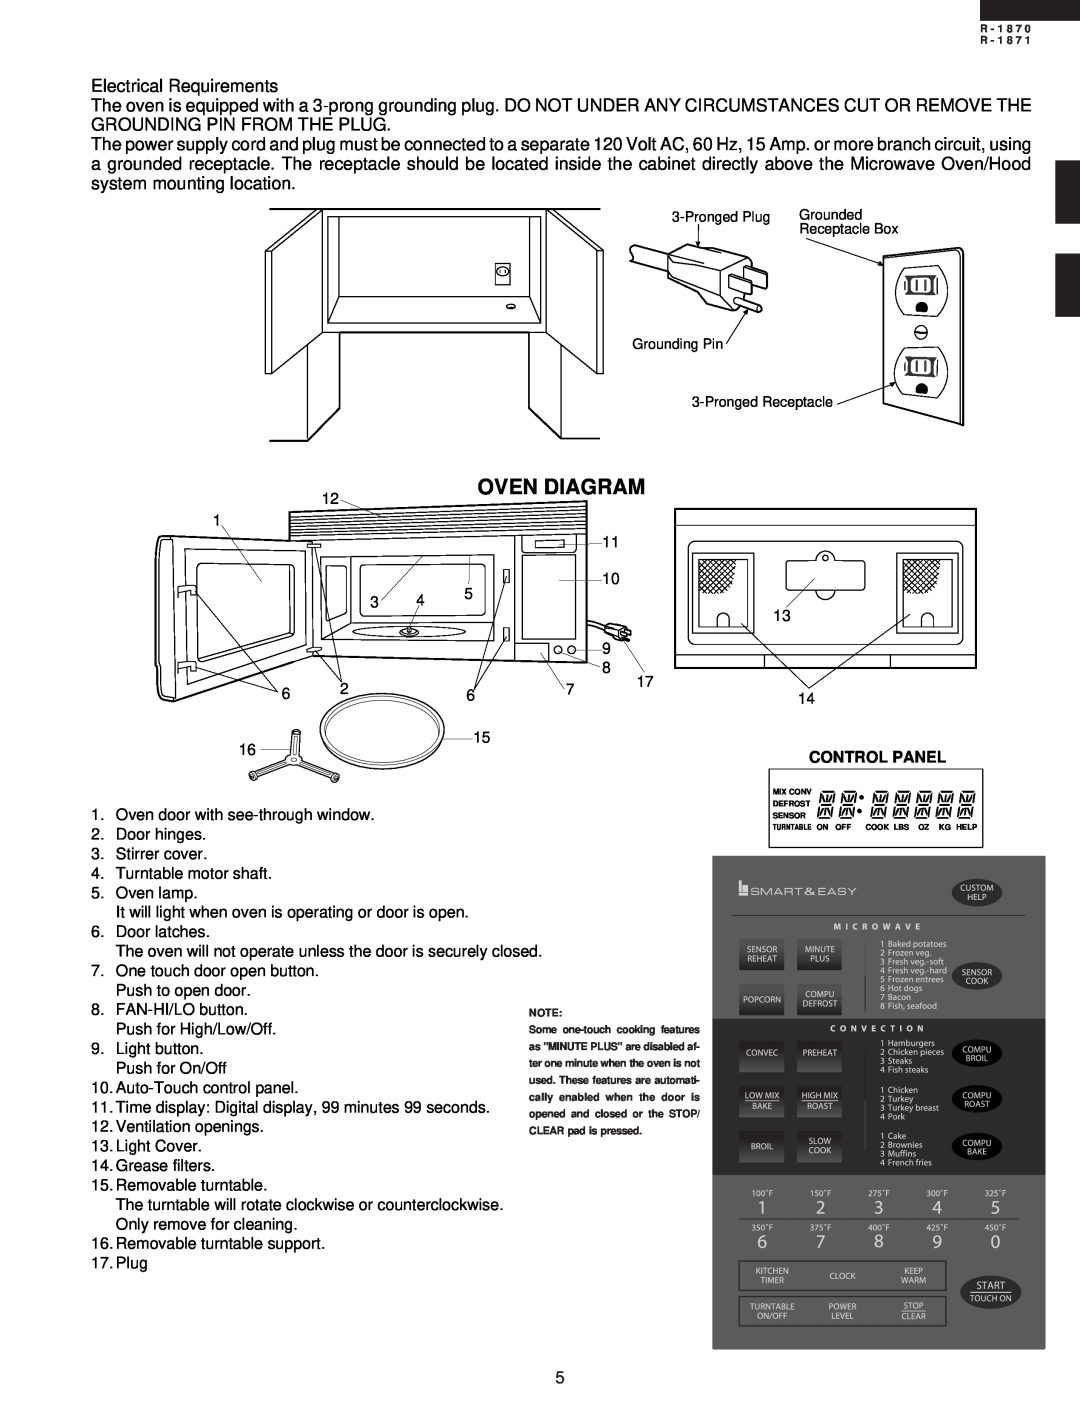 Sharp R-1870 service manual Oven Diagram 